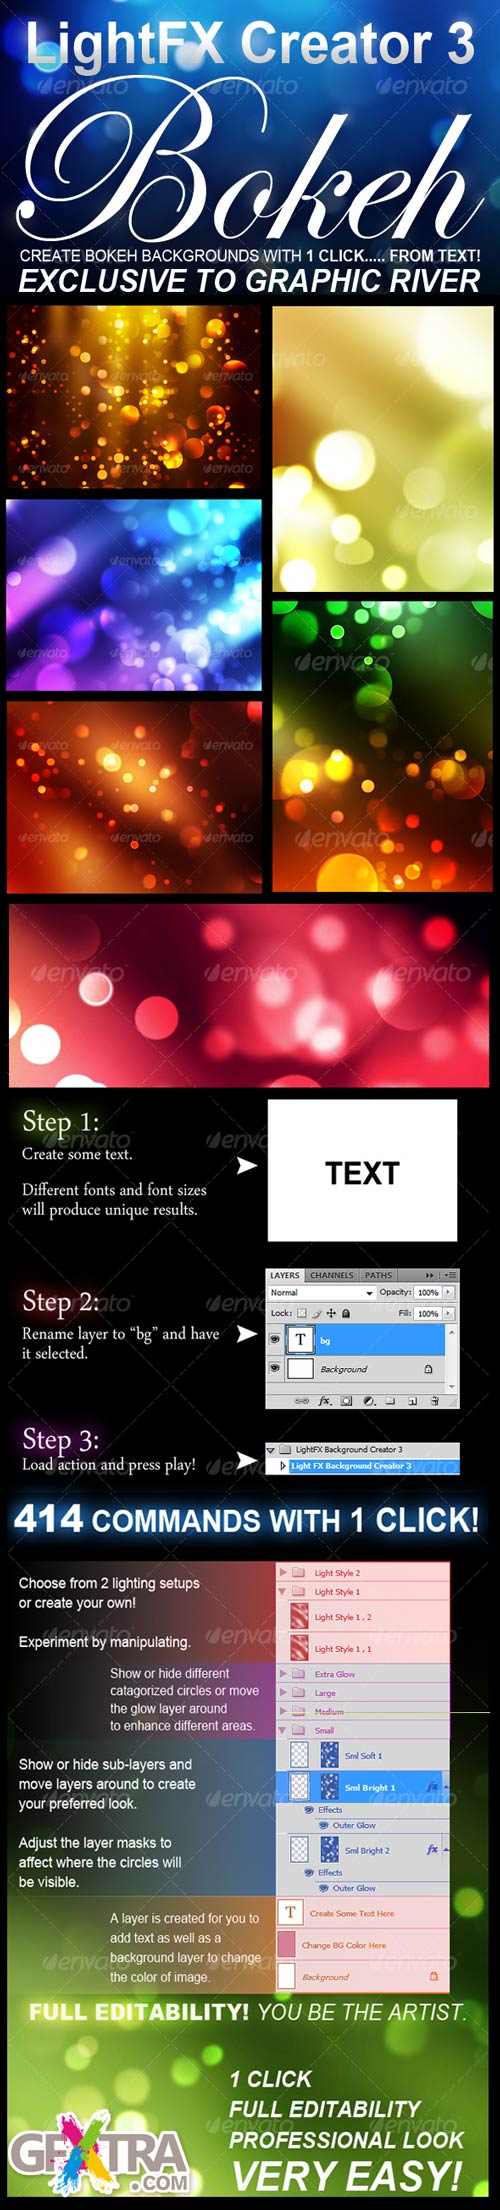 LightFX Background Creator 3 - Actions - GraphicRiver - REUPLOADED!